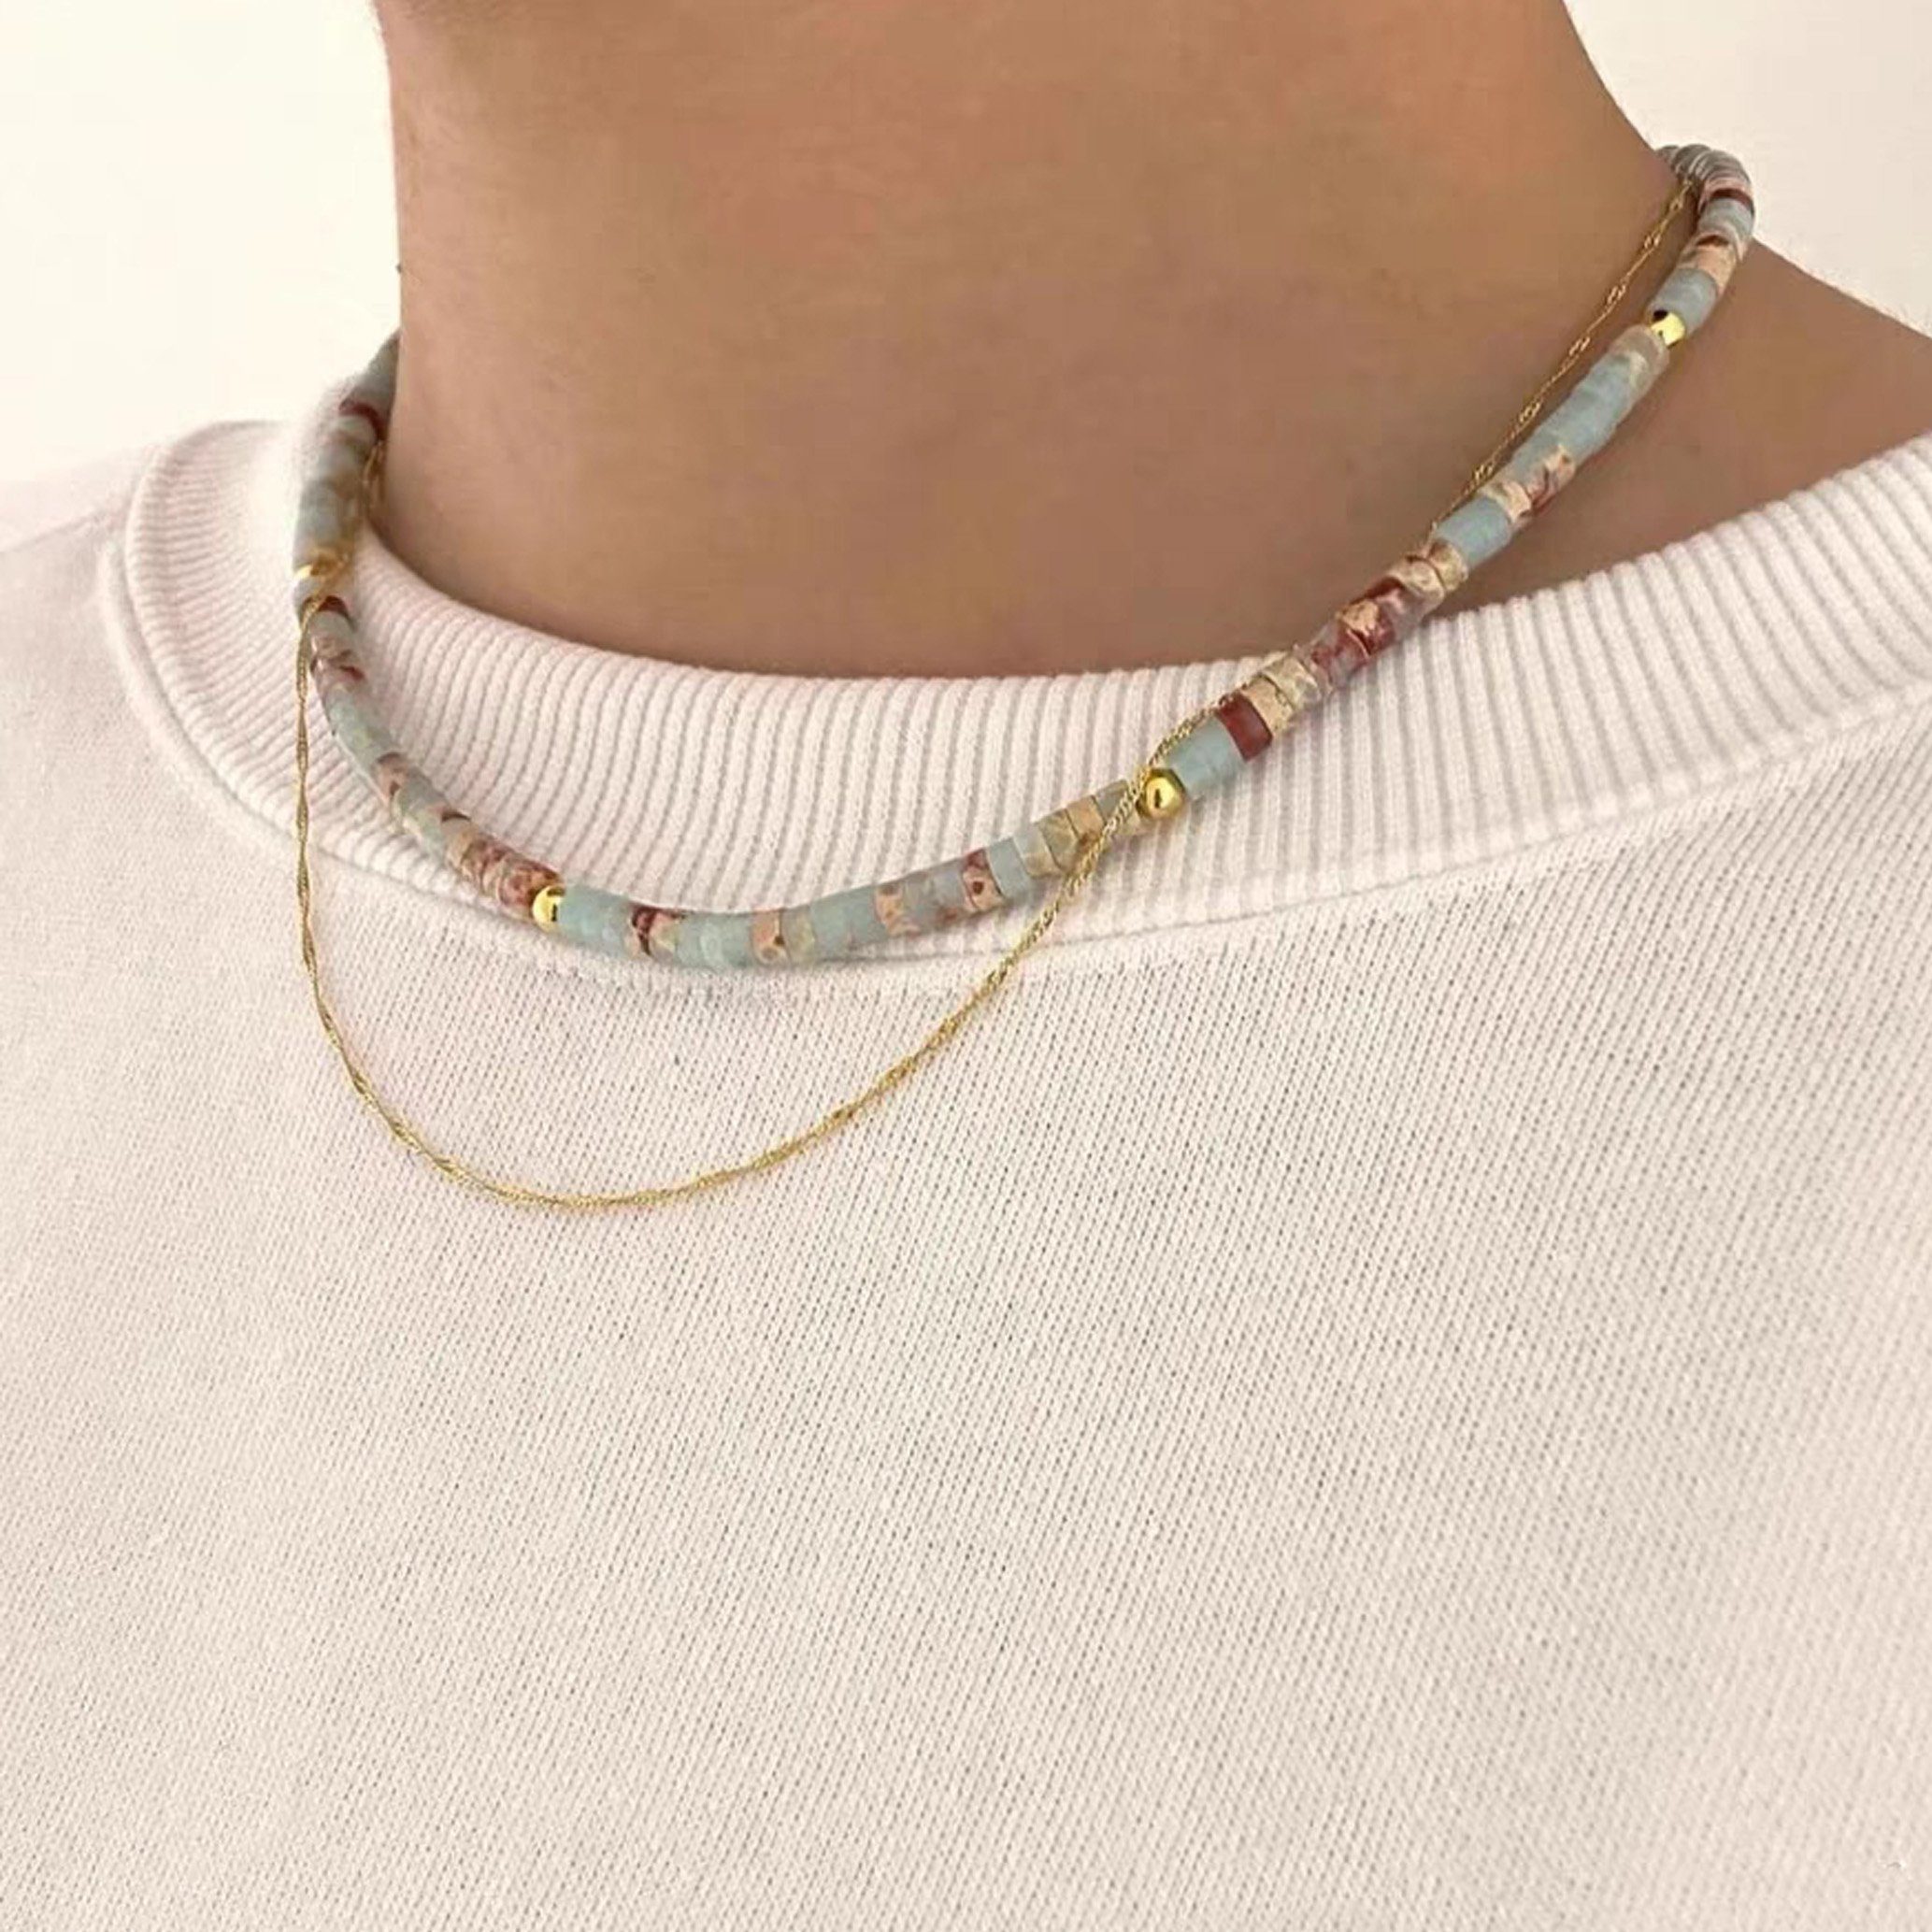 GOLDEN Medusa 18K Edelsteinen Daydream Charm-Kette Sommerliche Halskette vergoldet aus Glasperlen,